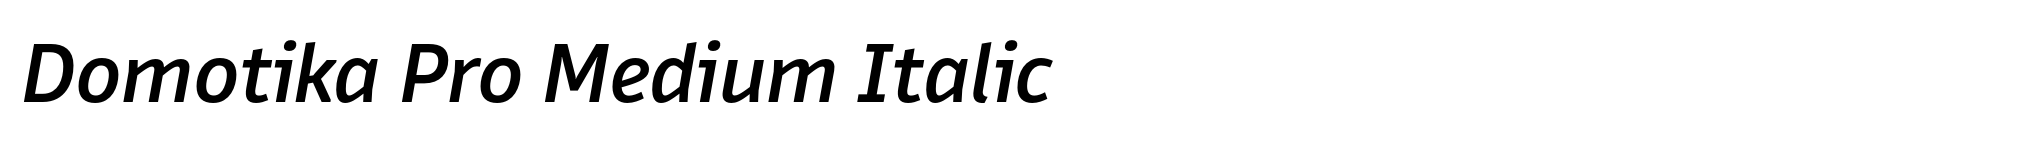 Domotika Pro Medium Italic image